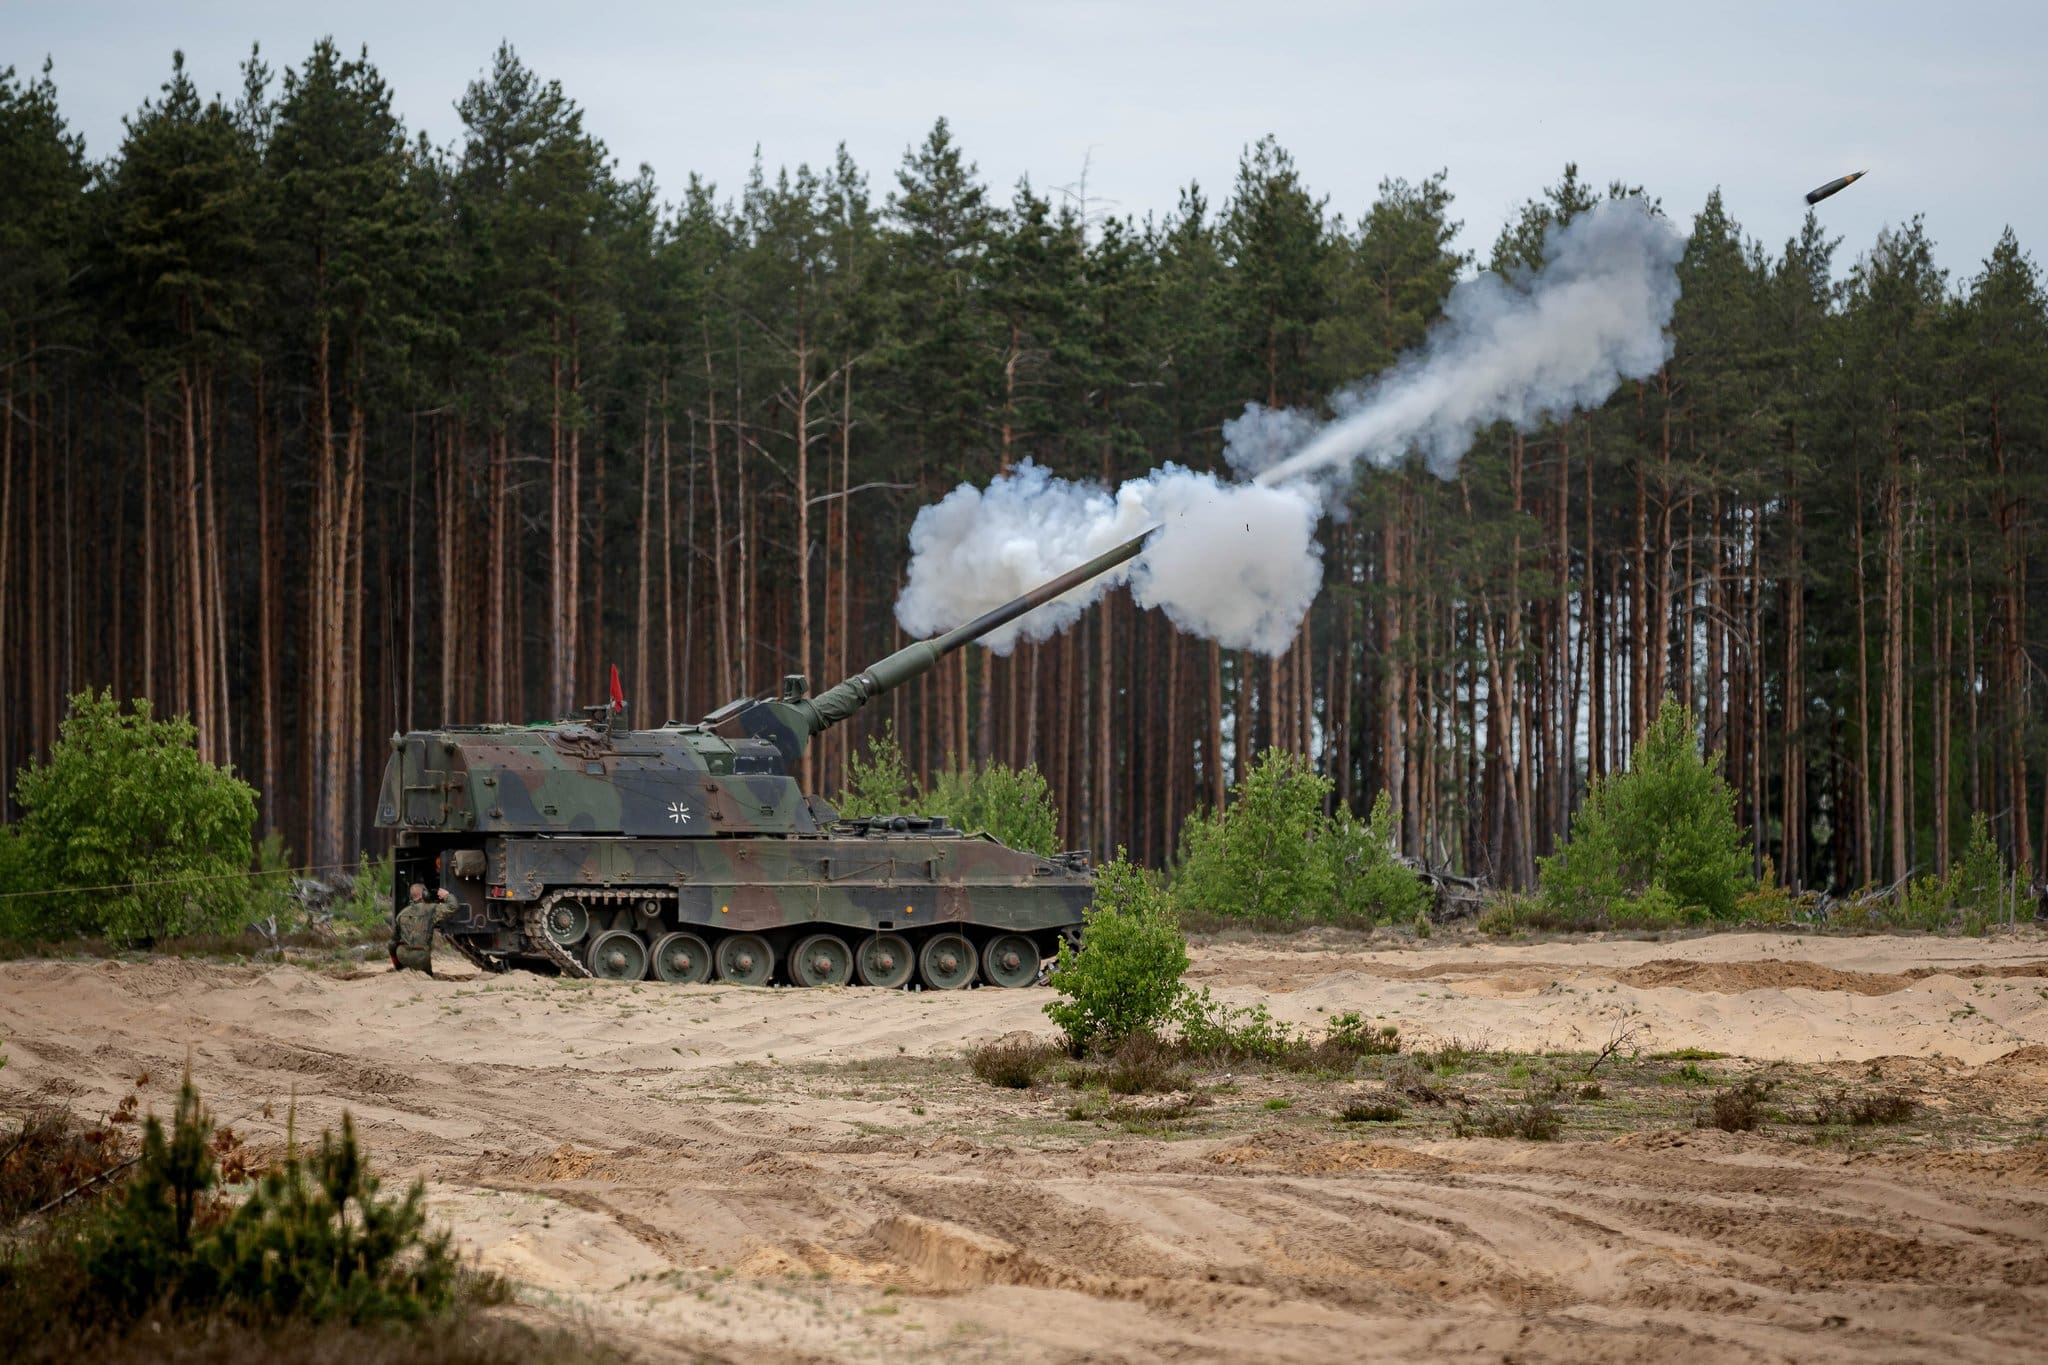 las-fuerzas-armadas-de-alemania-compraran-municion-de-artilleria-de-155mm-a-rheinmetall-por-8.500-millones-de-euros